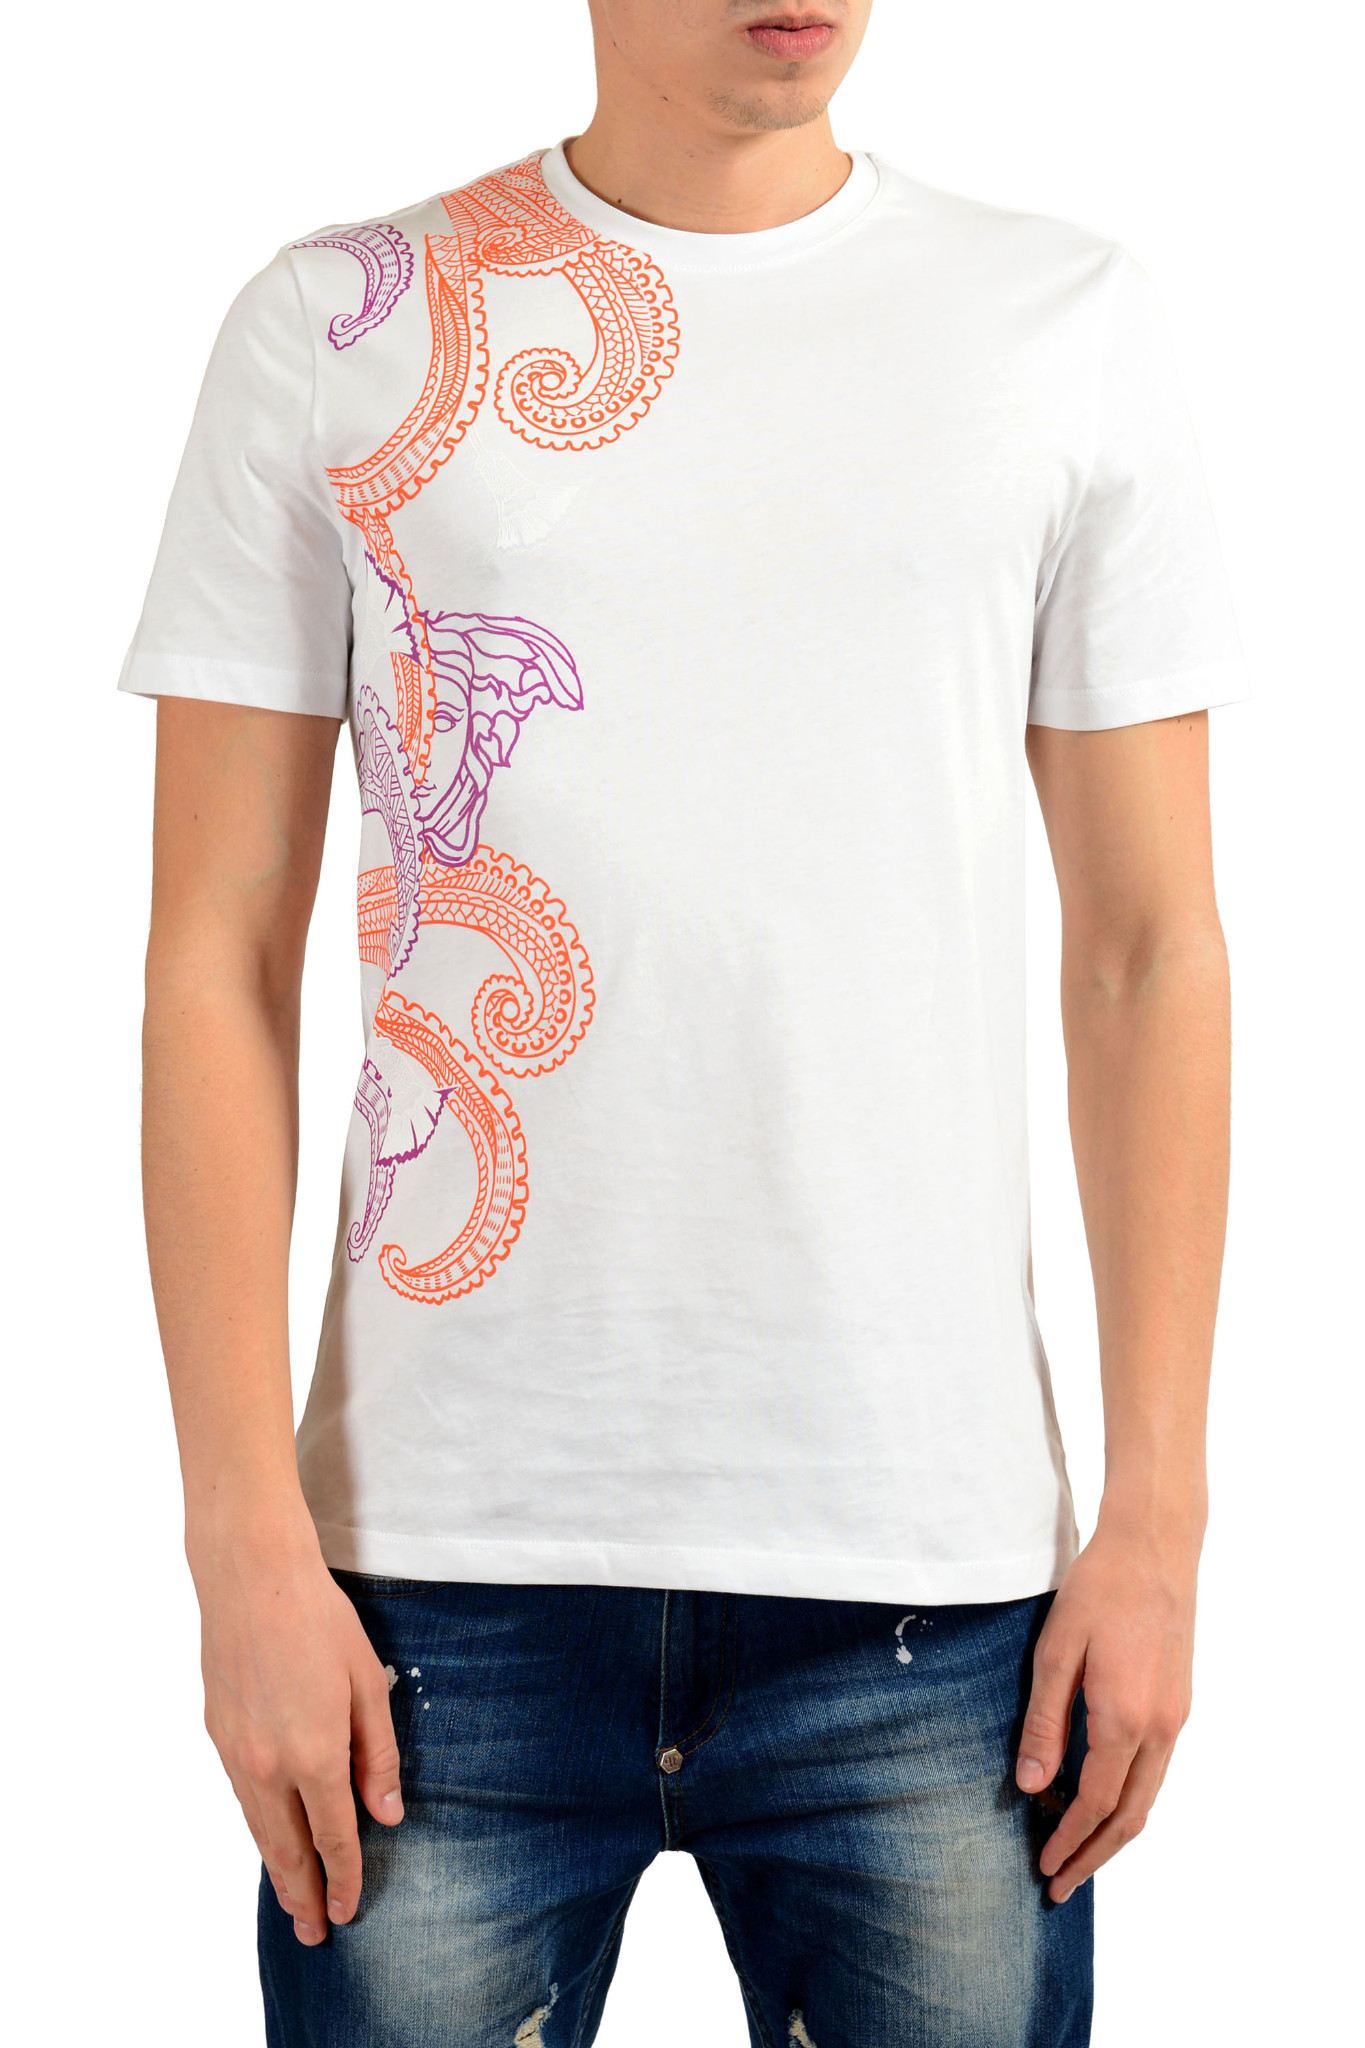 Versace Collection Men's White Graphic Print T-Shirt Sz S M L XL 2XL | eBay